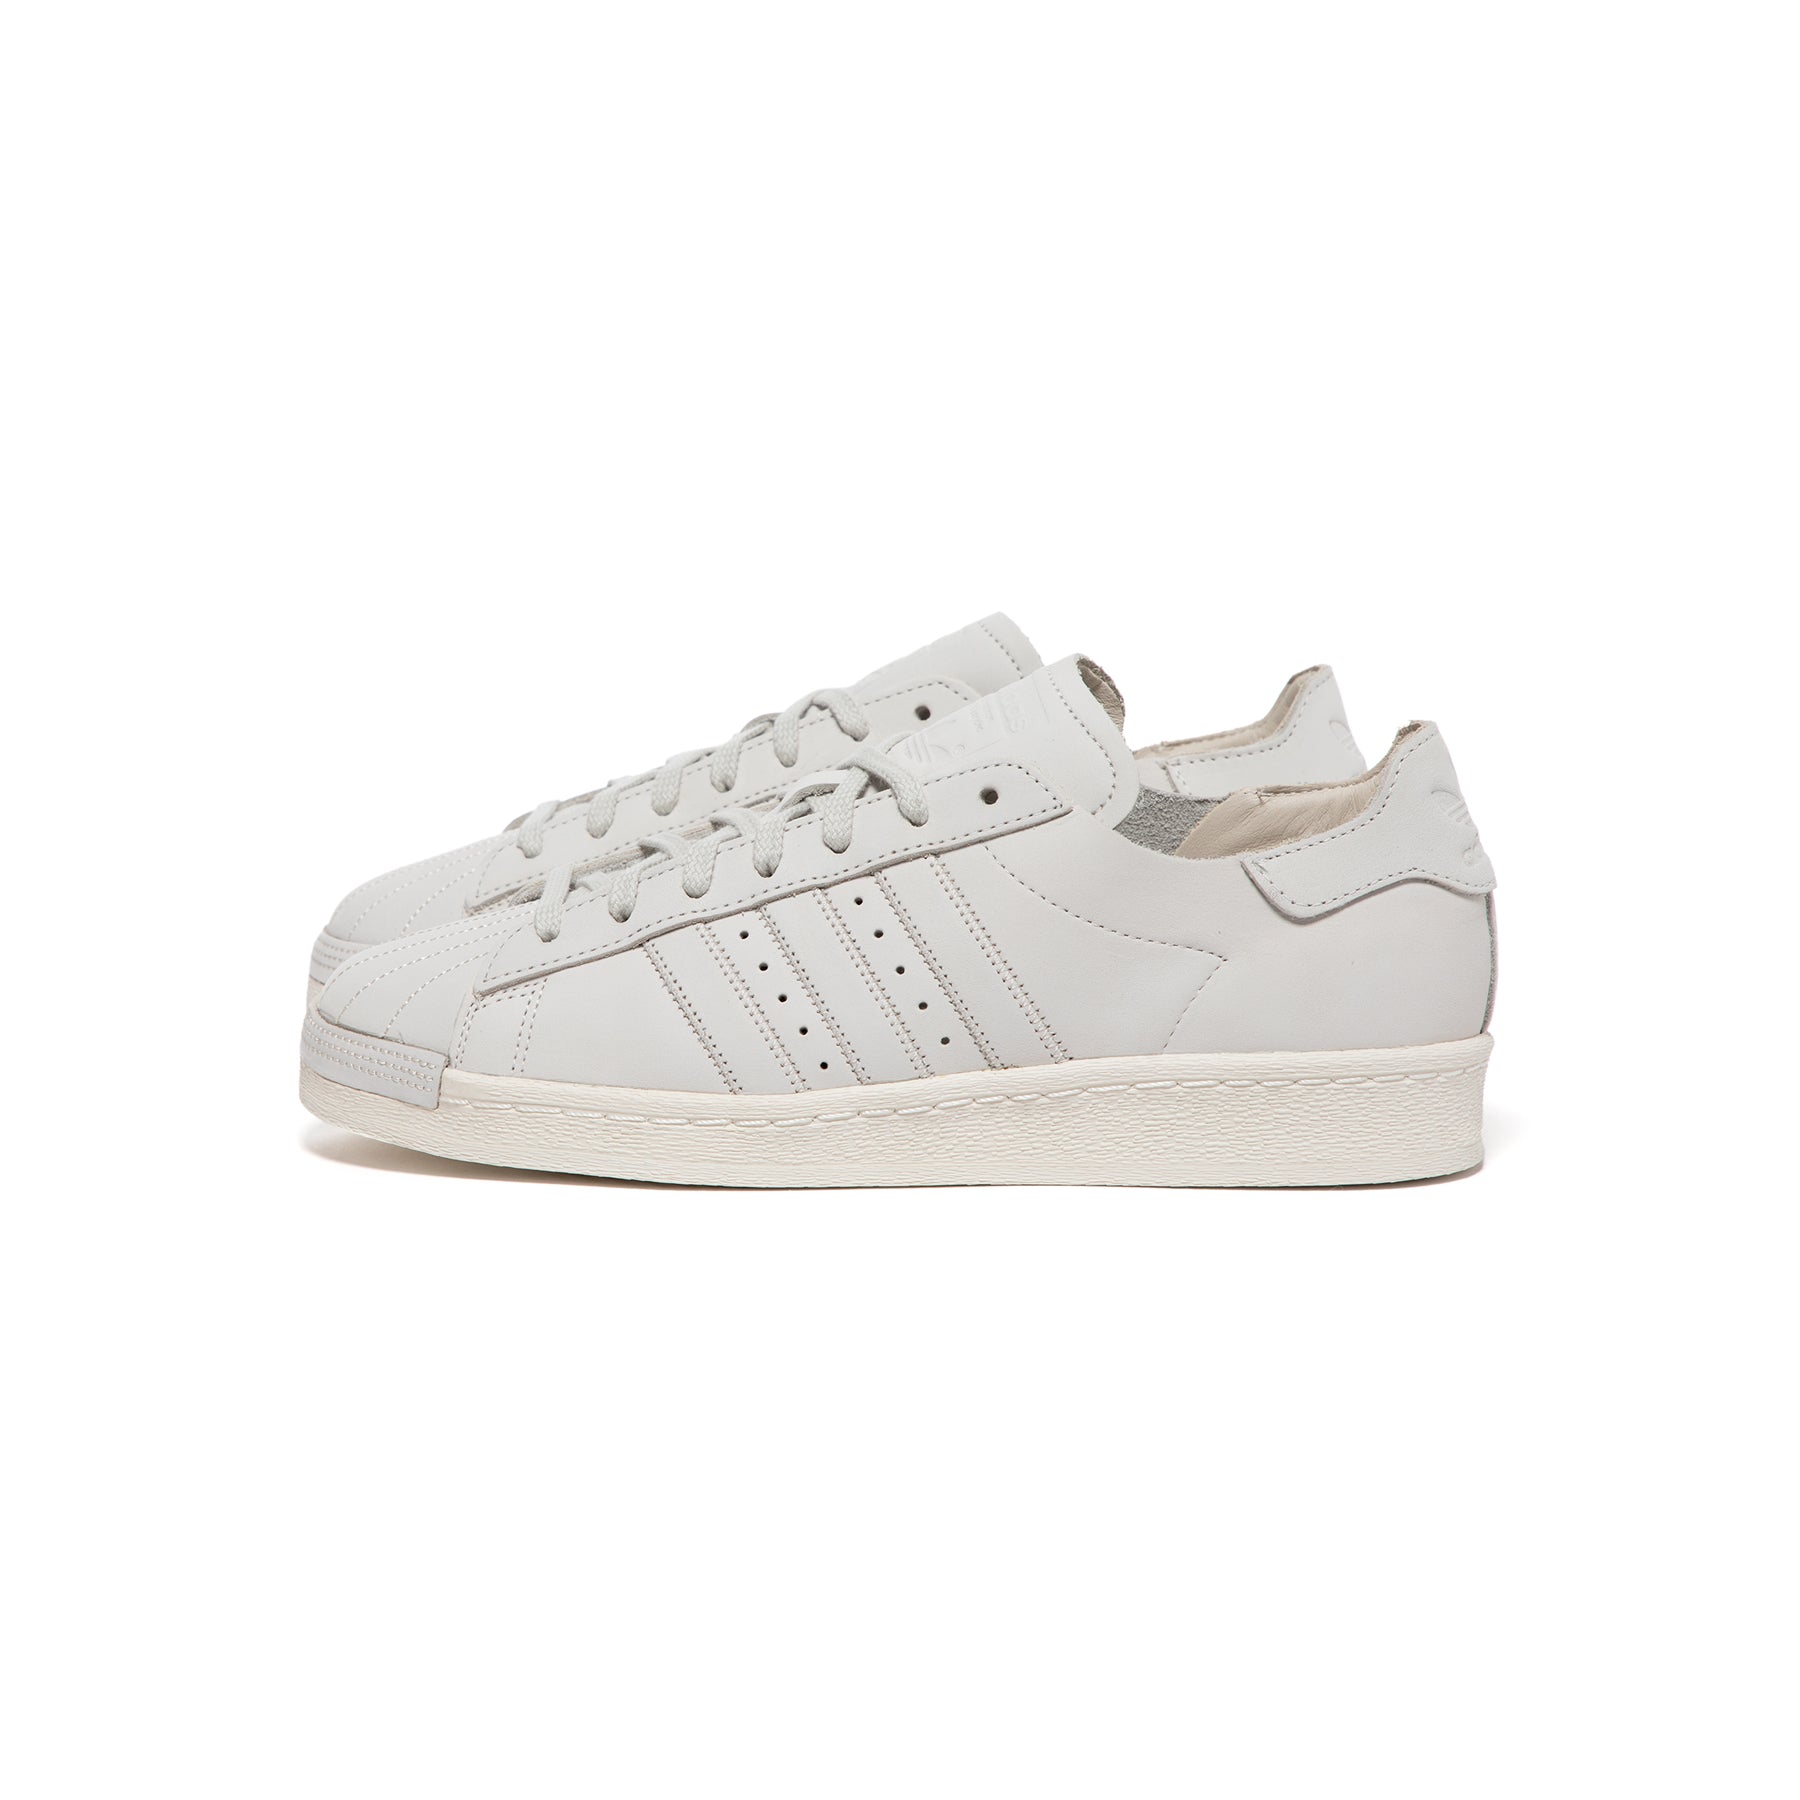 Adidas Originals Superstar Alumina/Alumina/Off White Men's Shoes, Size: 13